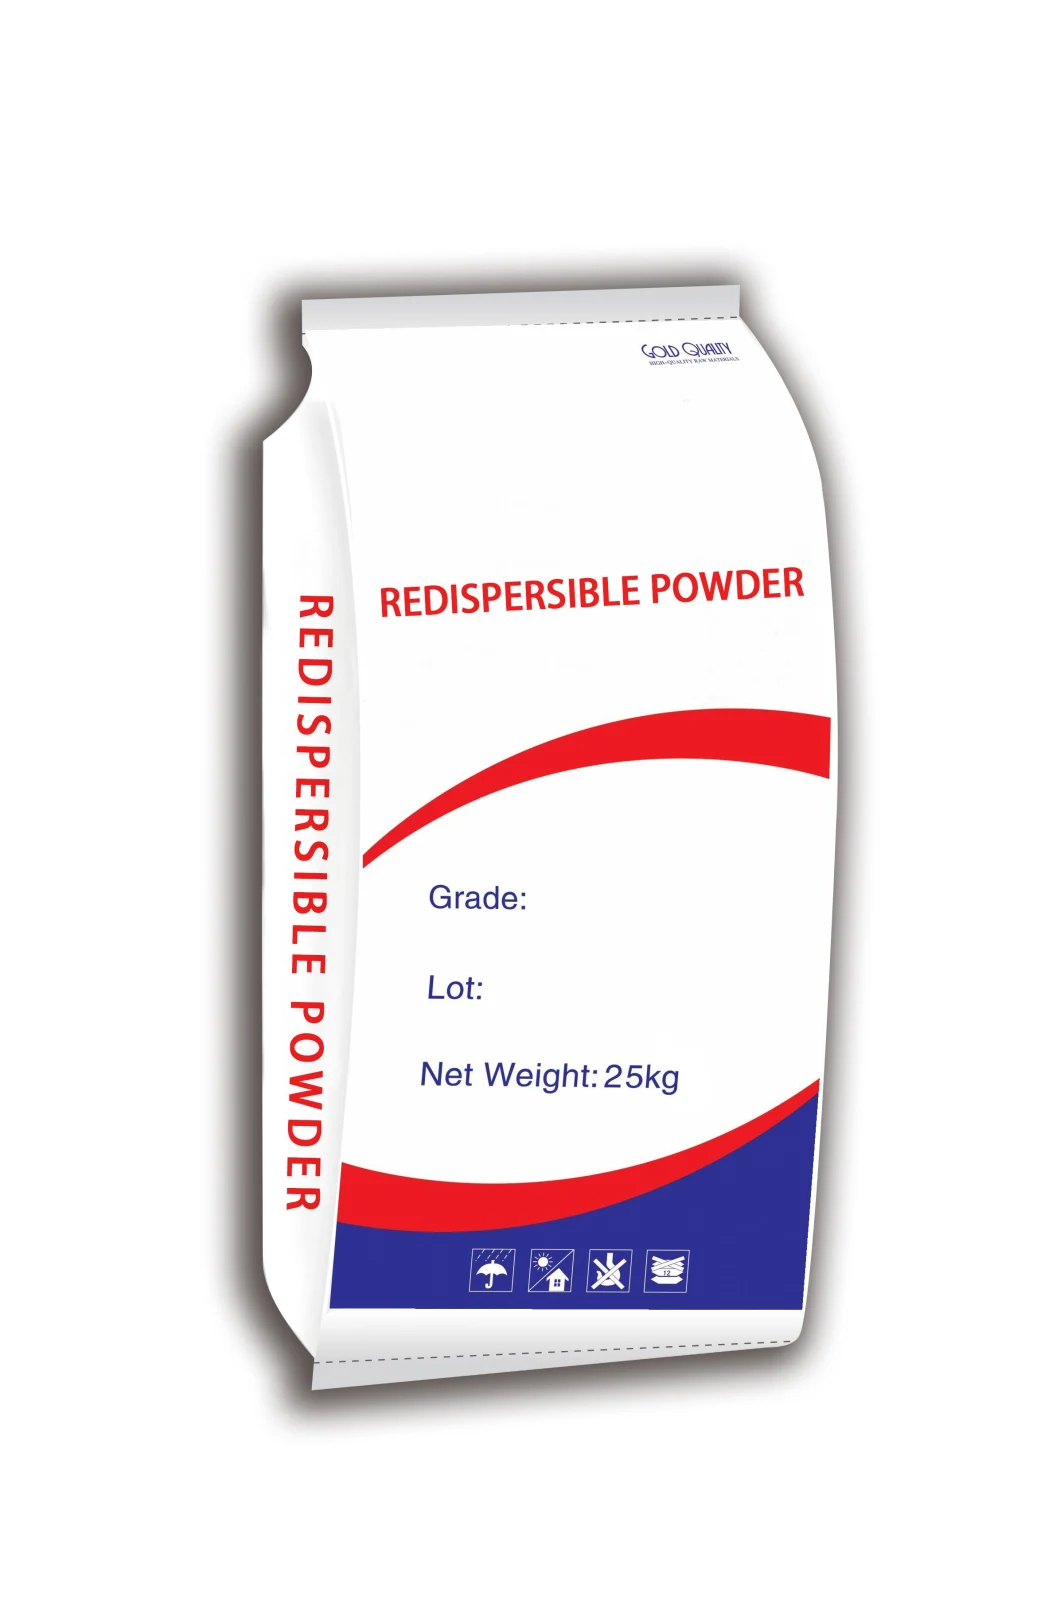 Redispersible Latex Powder Construction Grade Vae Rdp for Gypsum Mortar Products.